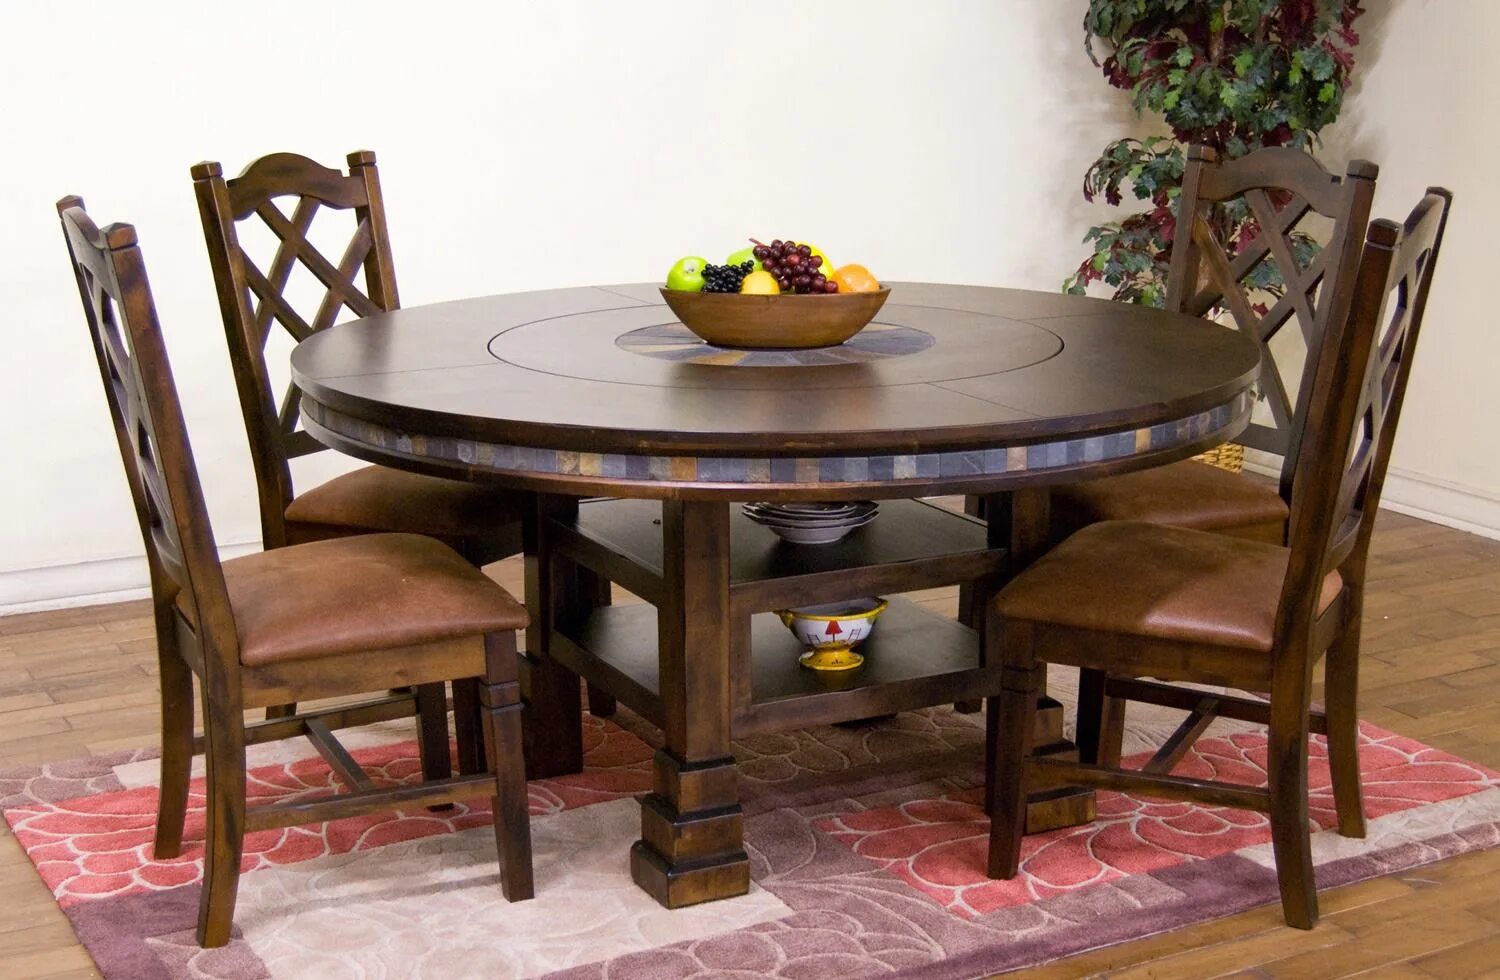 Круглый стол AMCLASSIC aim Dining Table. Стол Täby Walnut 120 орех. Круглый деревянный стол. Стол кухонный круглый деревянный. Красивые круглые столы